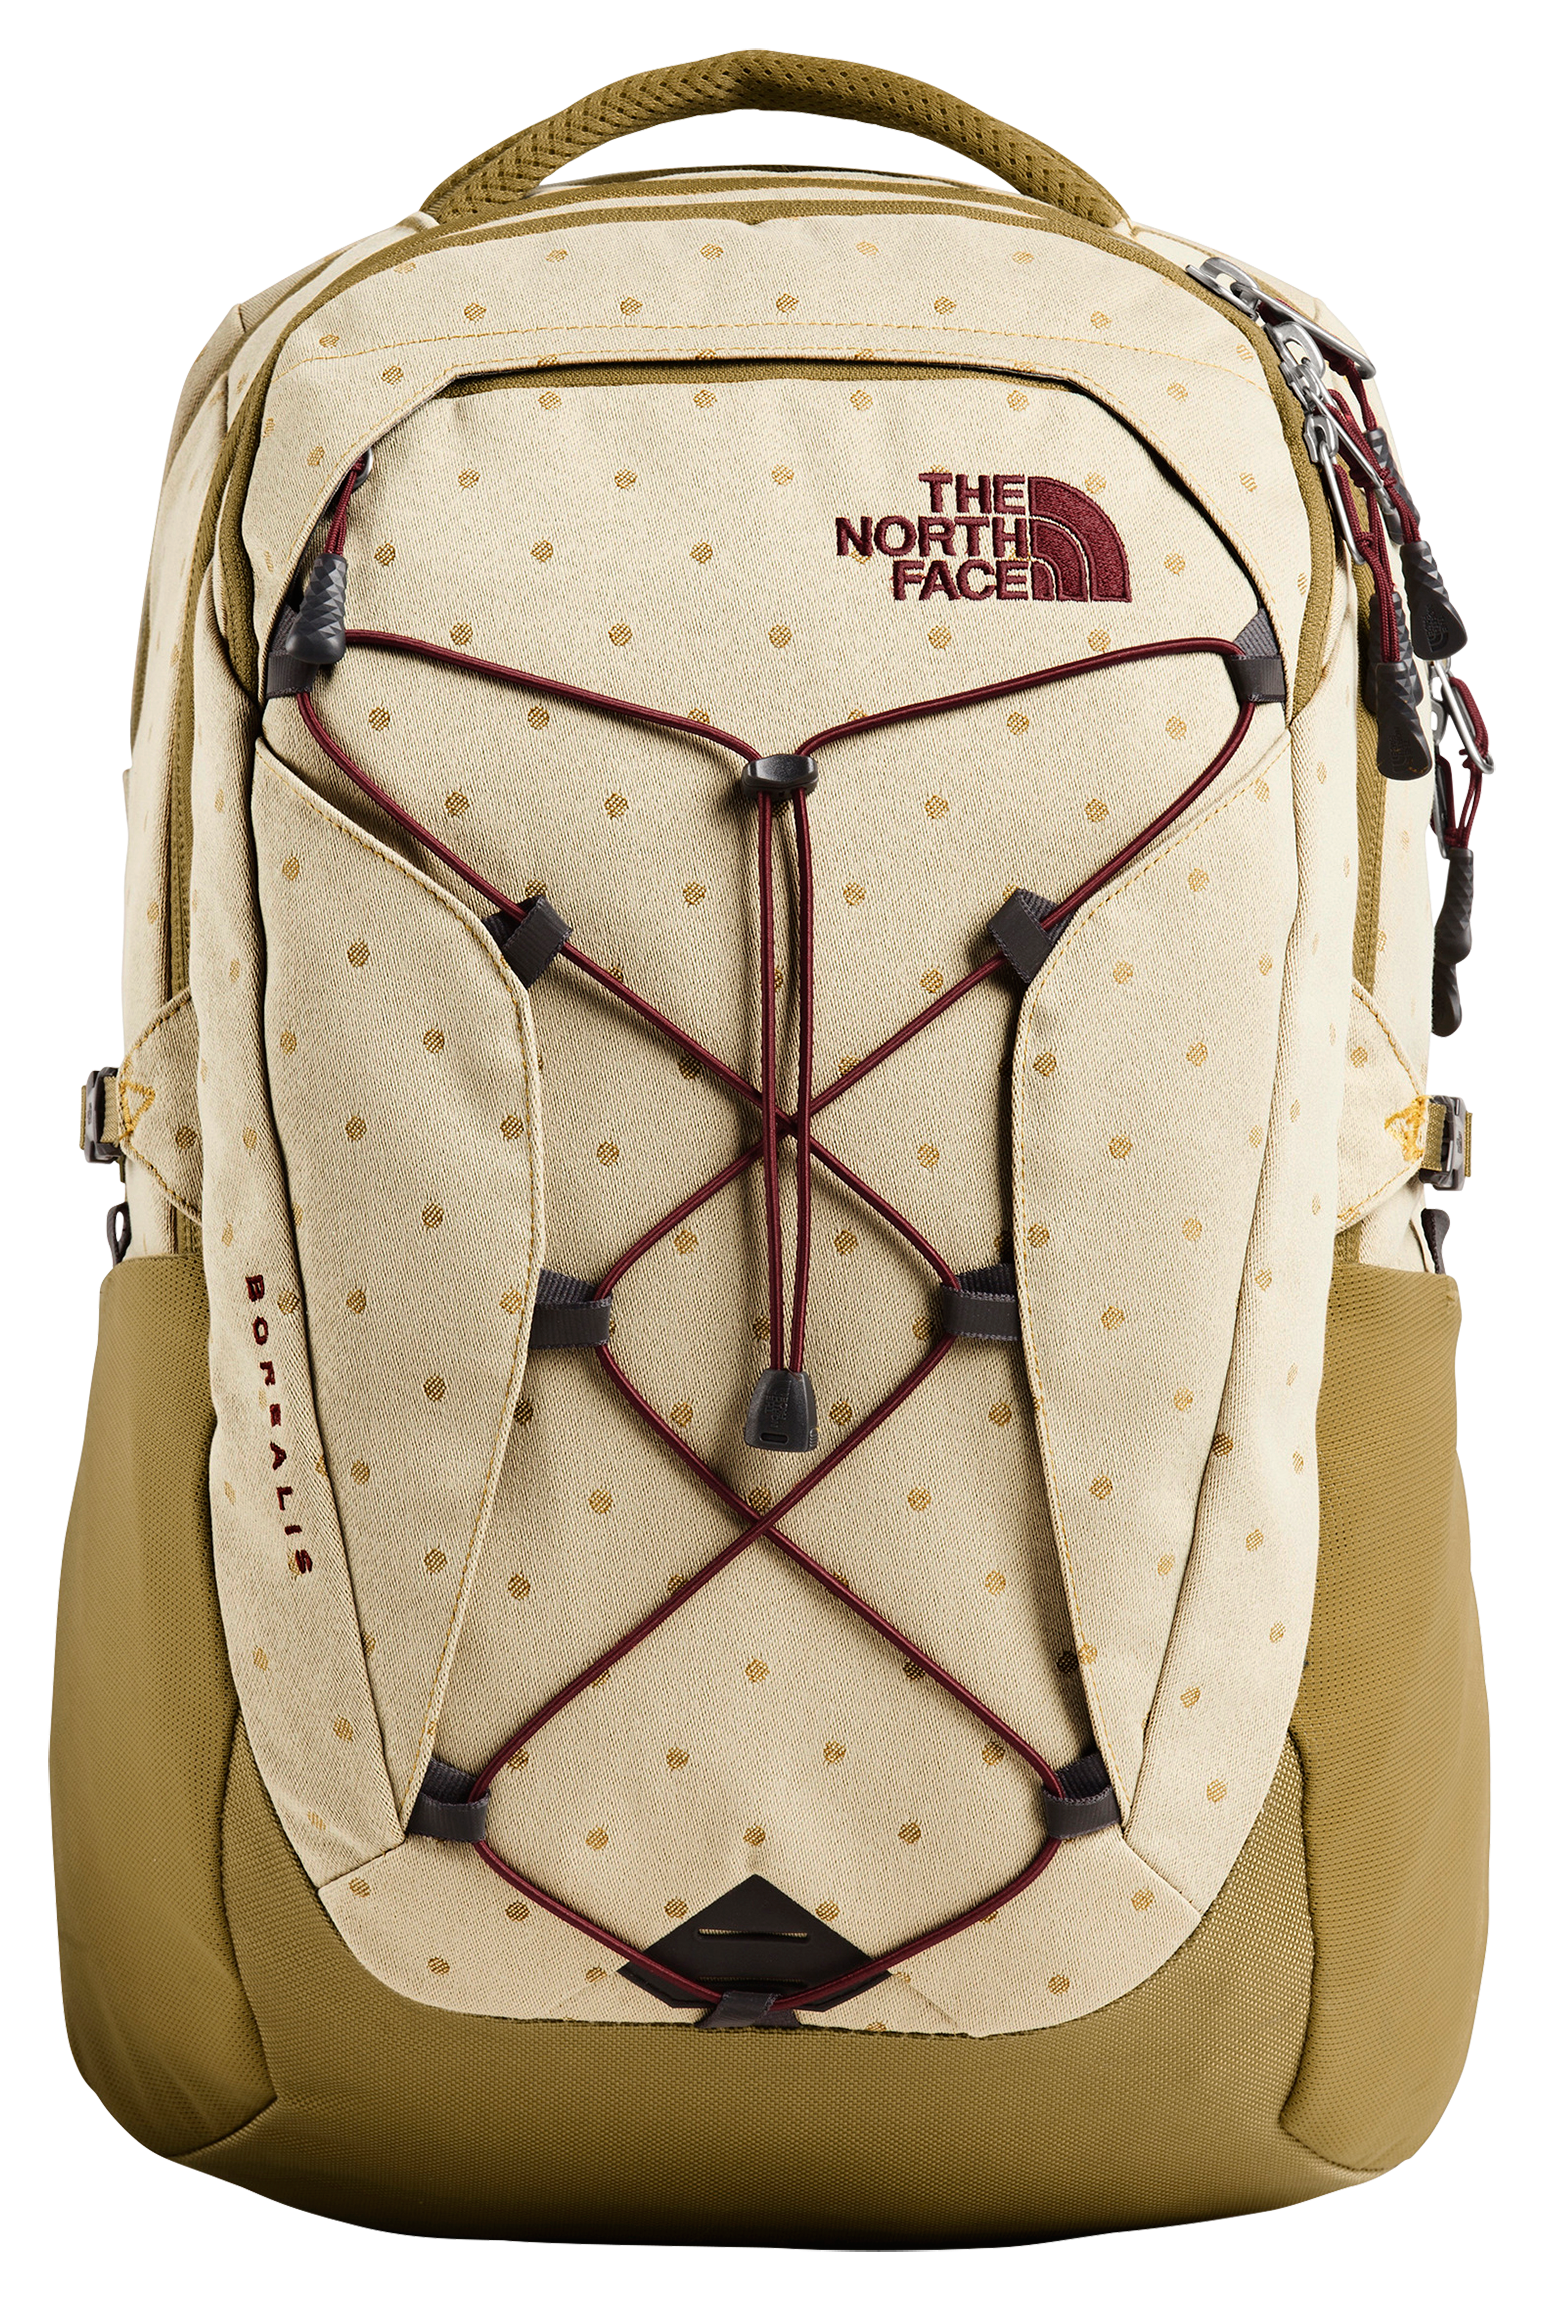 The North Face Borealis 27L Backpack for Ladies - British Khaki Polka Dot Jacquard British Khaki